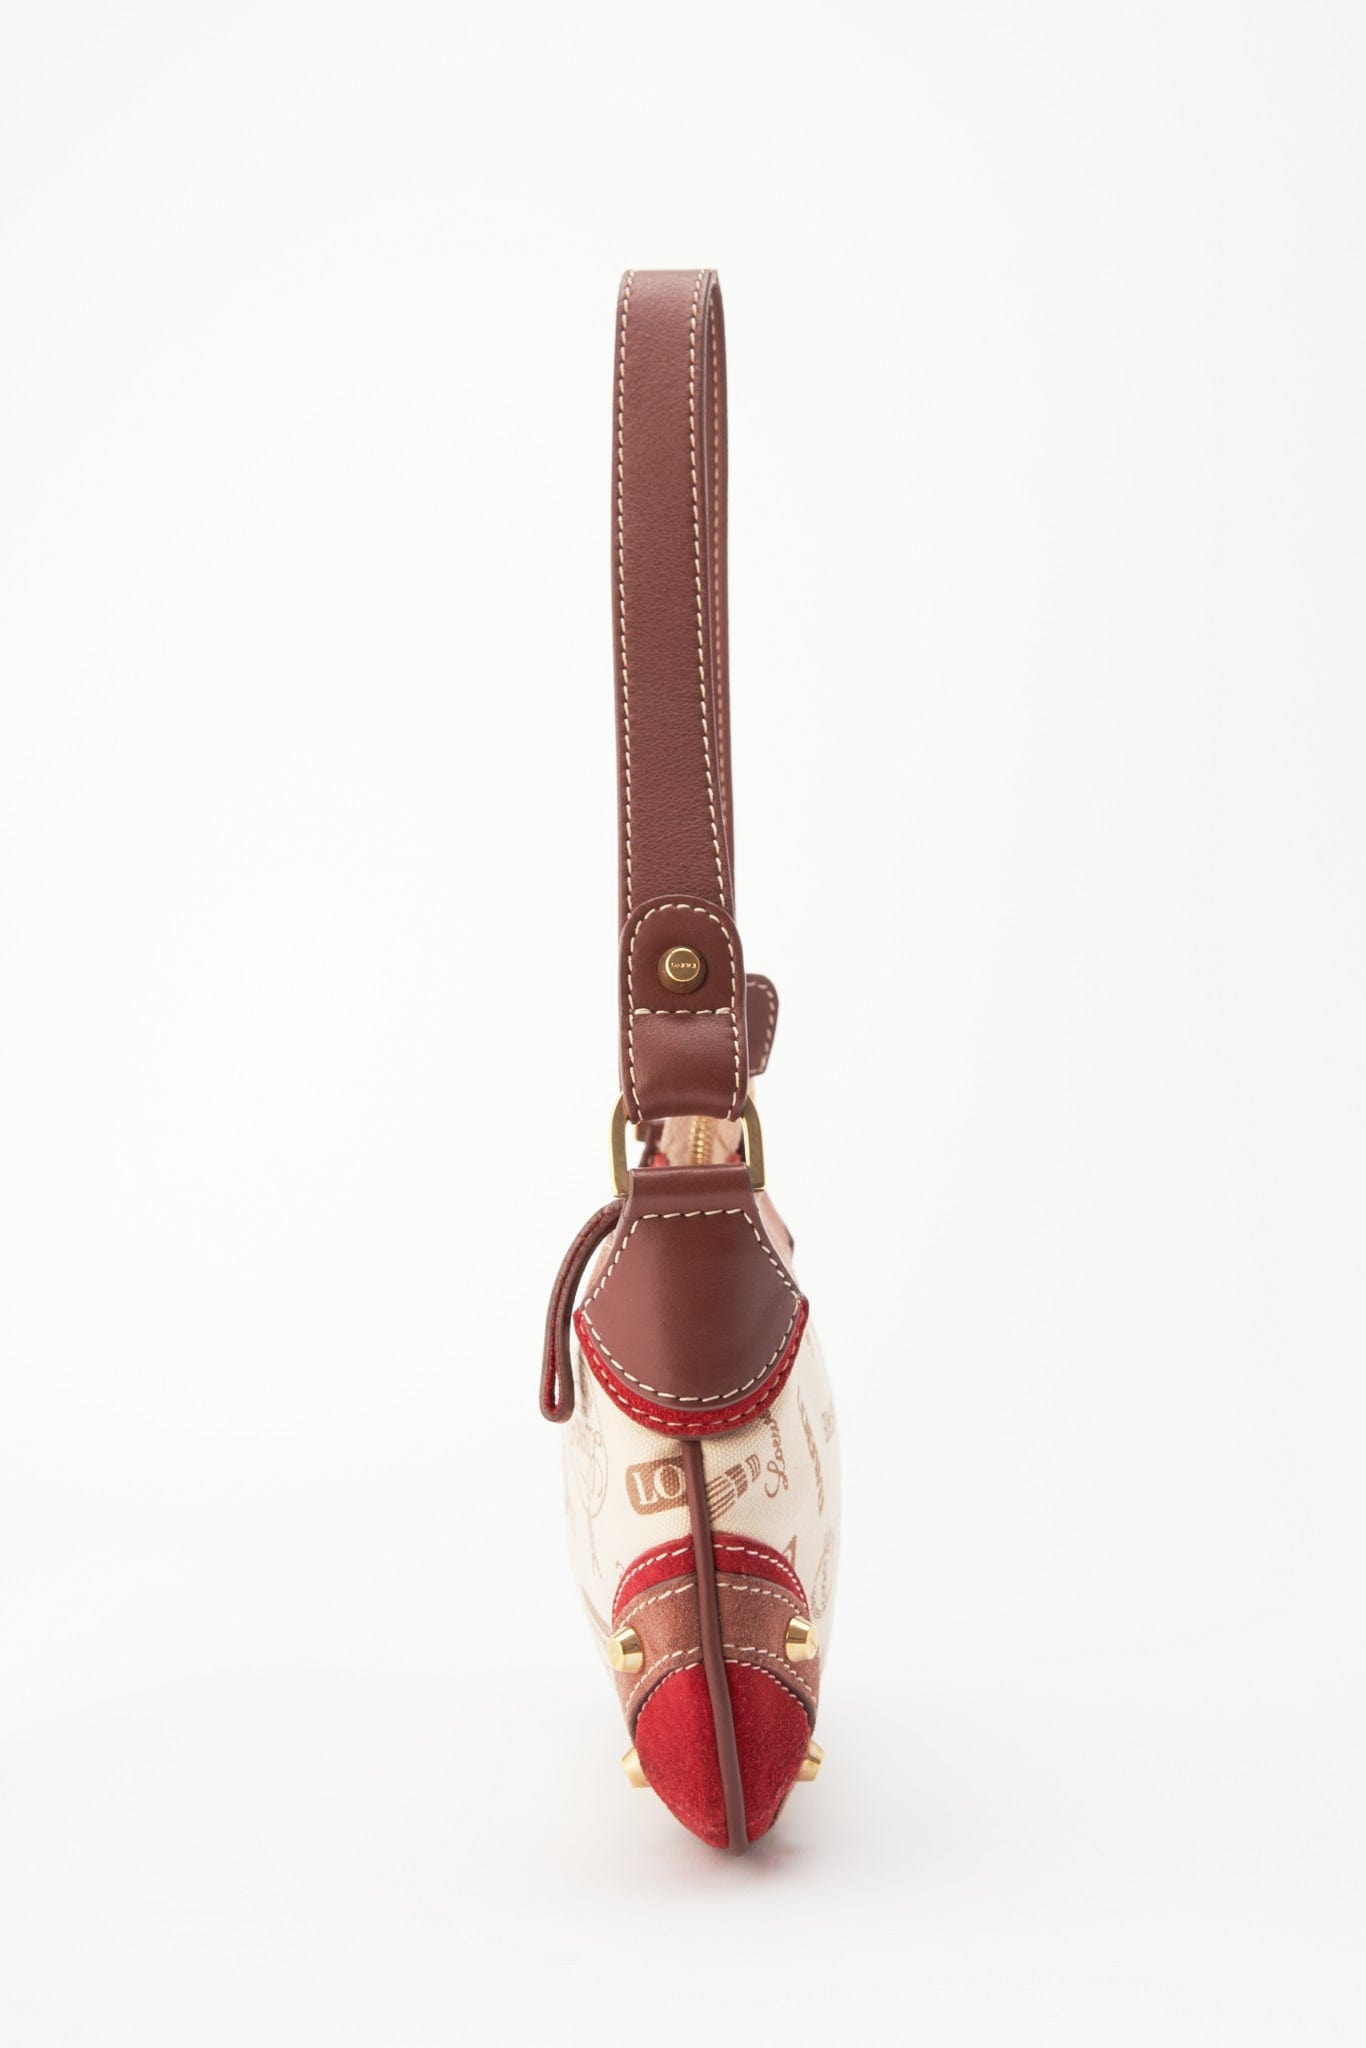 Vintage Loewe Pochette 160th Anniversary Handbag